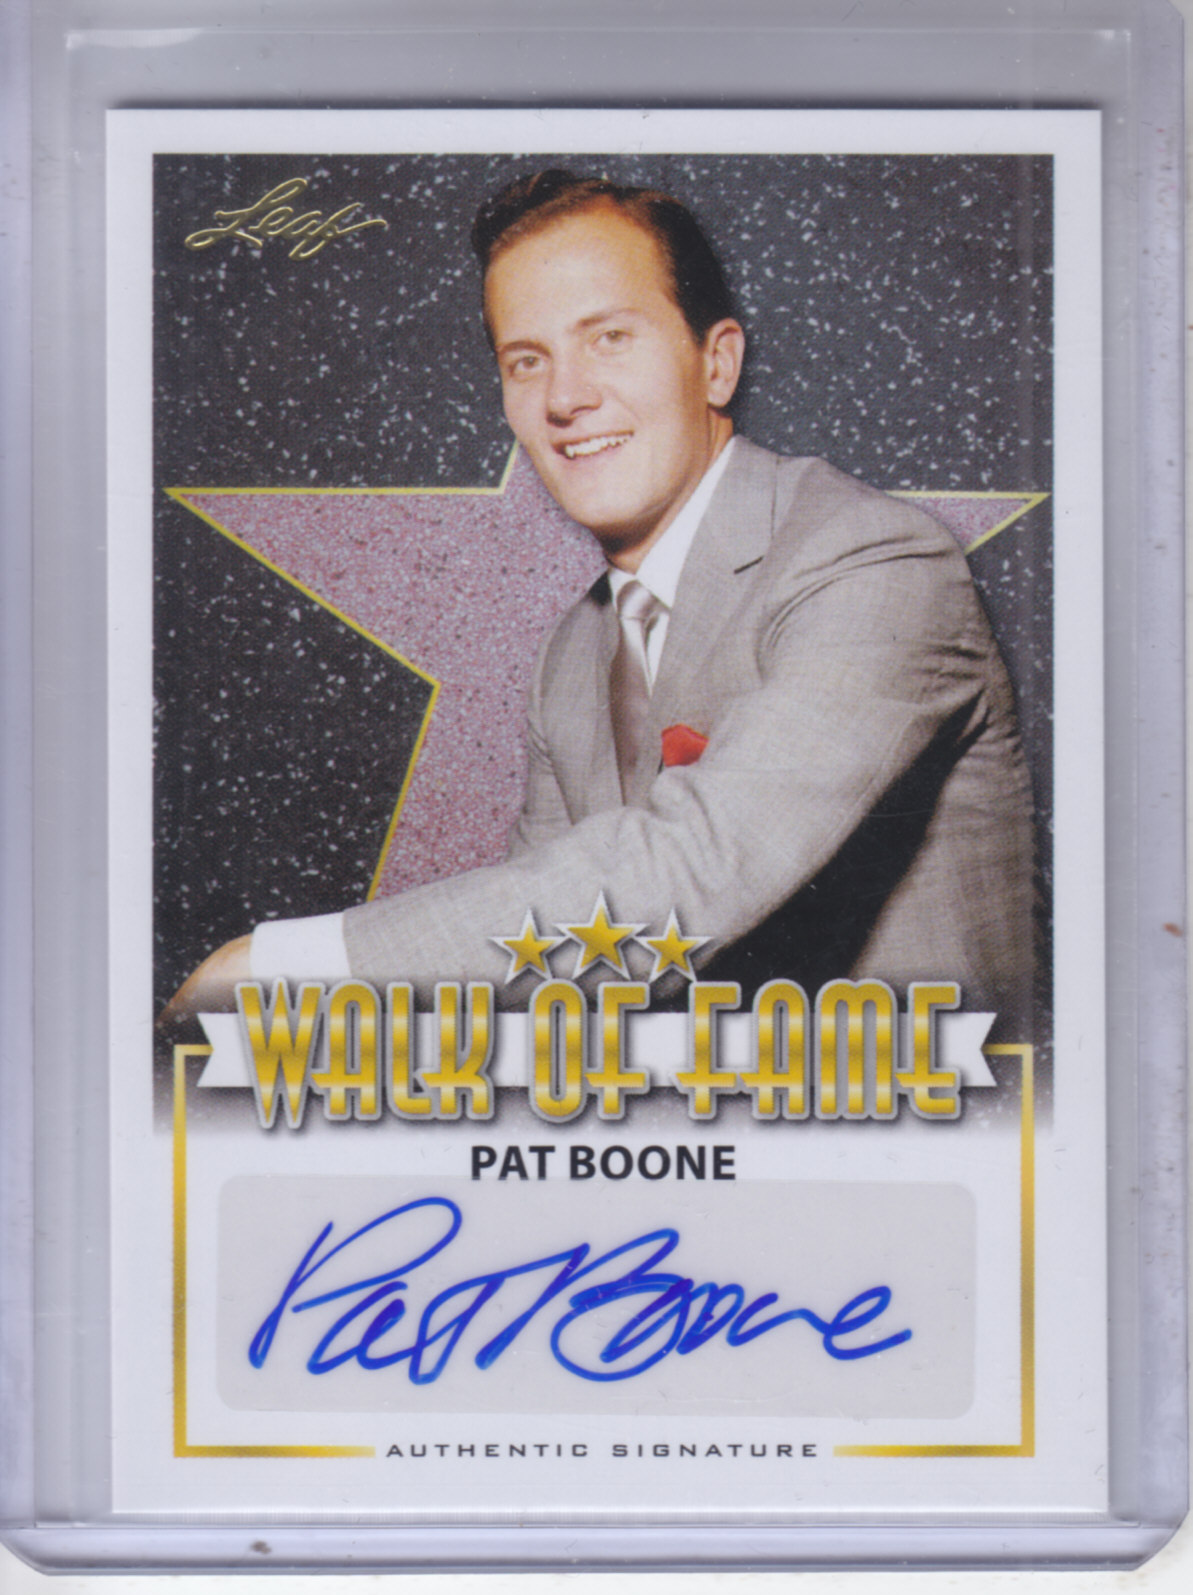  Pat Boone player image